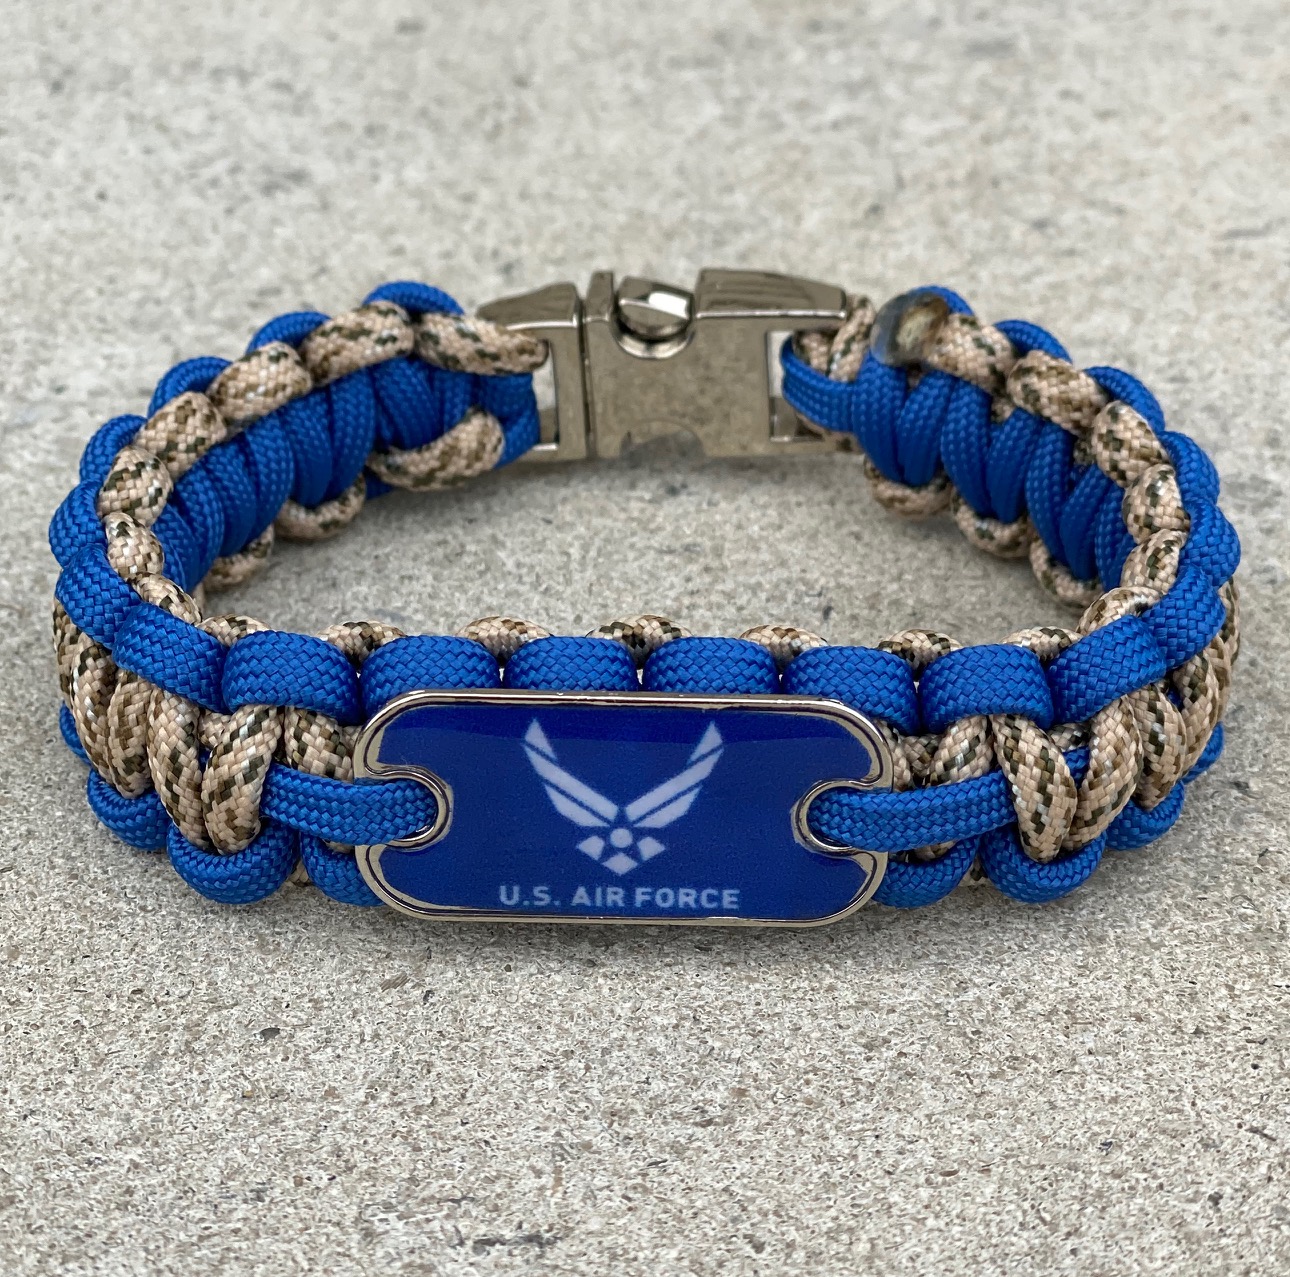 U.S Air Force Camo Bracelet USAF Jewelry Air Force Name Tape Military Bracelet U.S Air Force Gifts